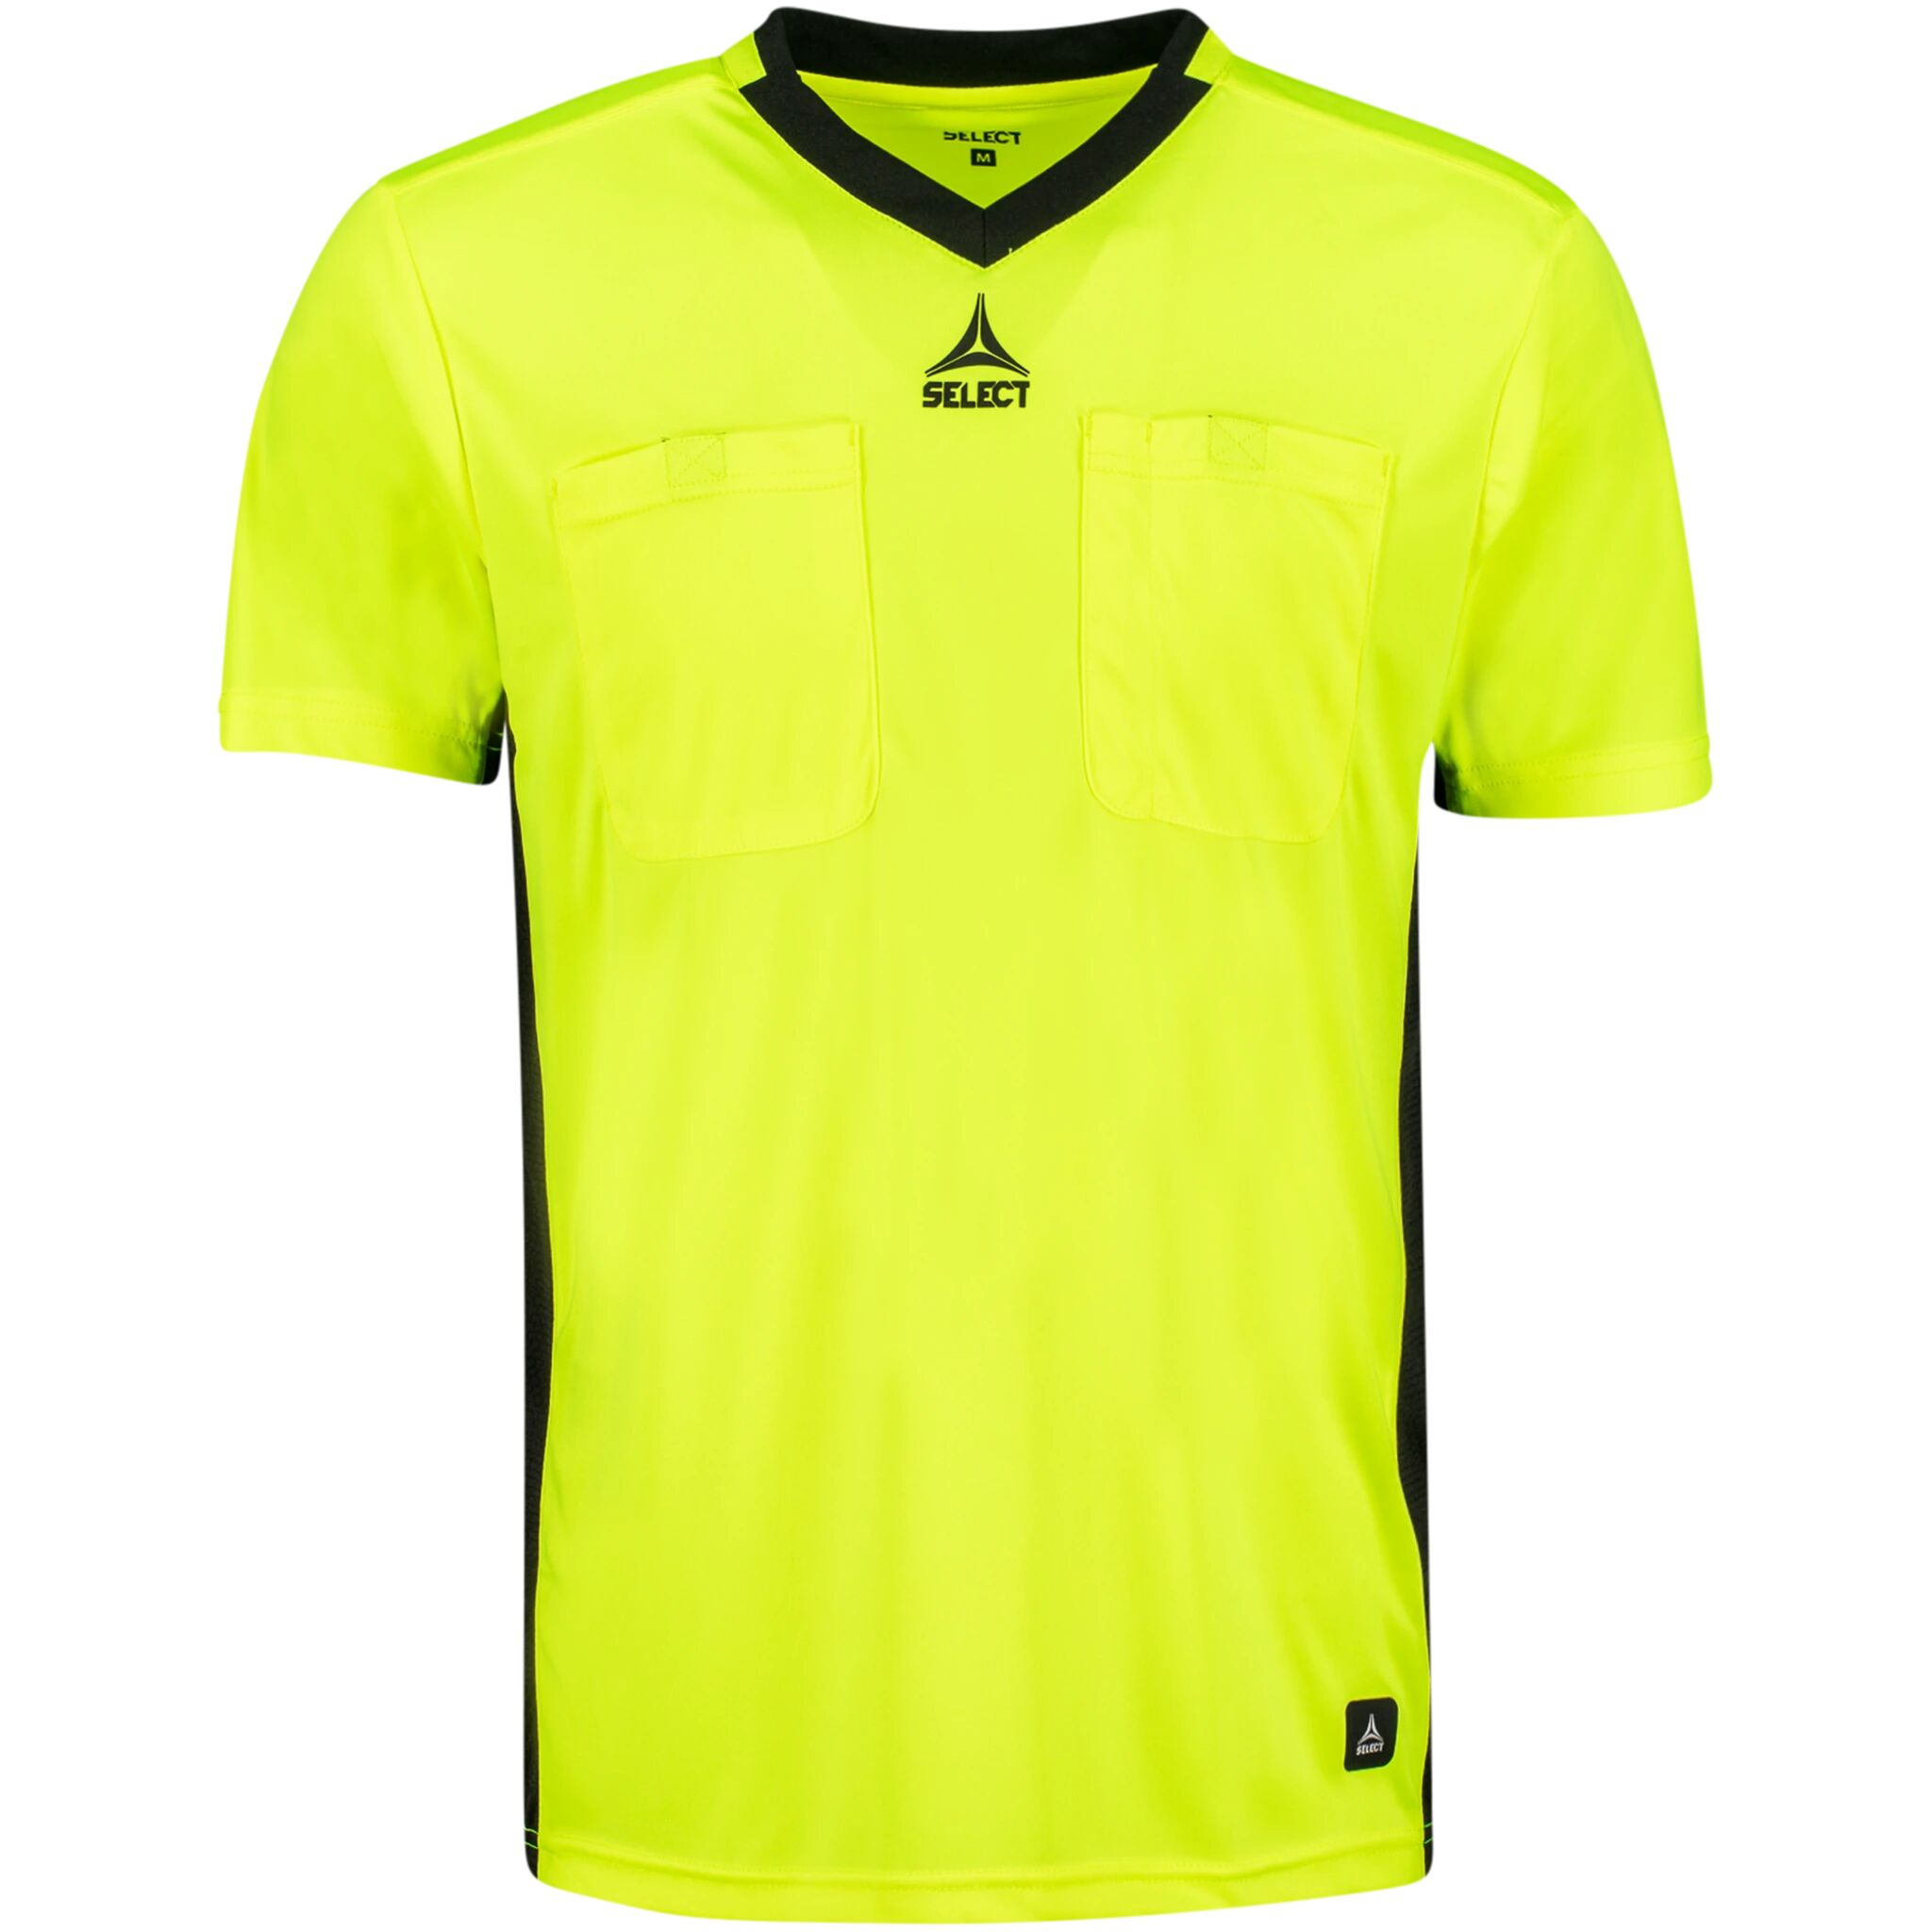 Select Referee shirt S/S v21, dommerdrakt senior L Yellow/Black